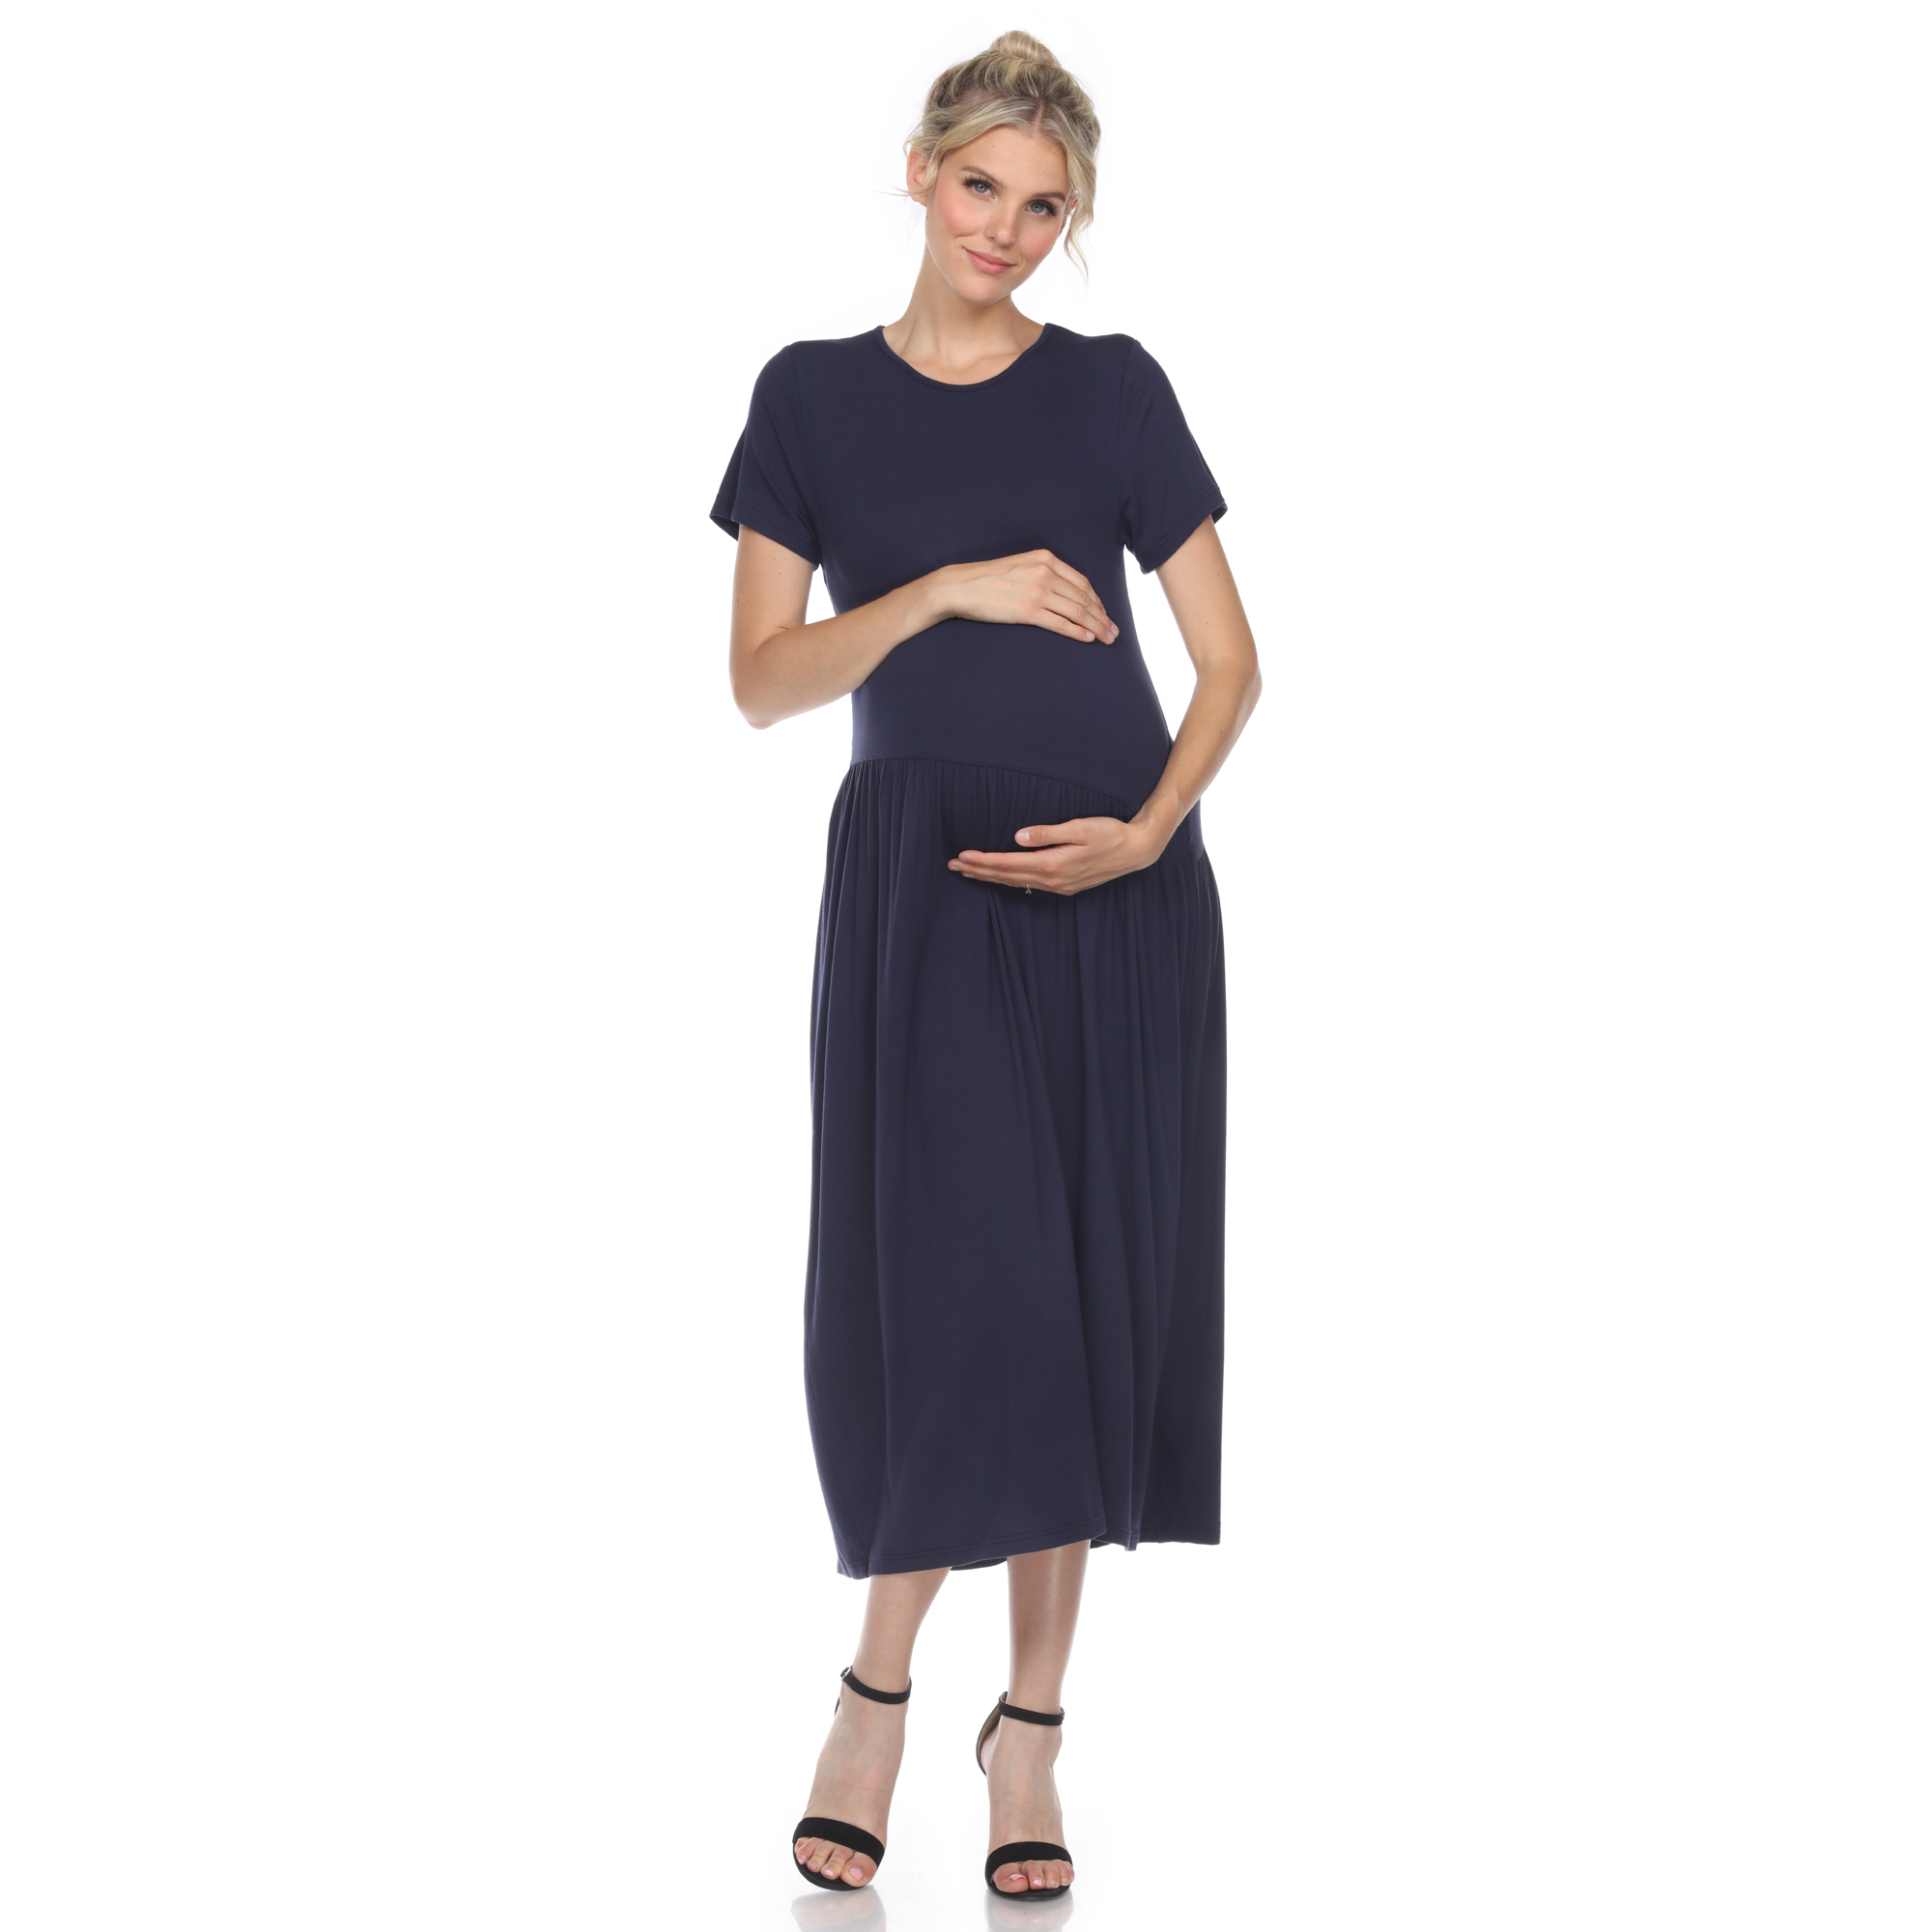 White Mark Womenâs Maternity Short Sleeve Maxi Dress - Navy, Small